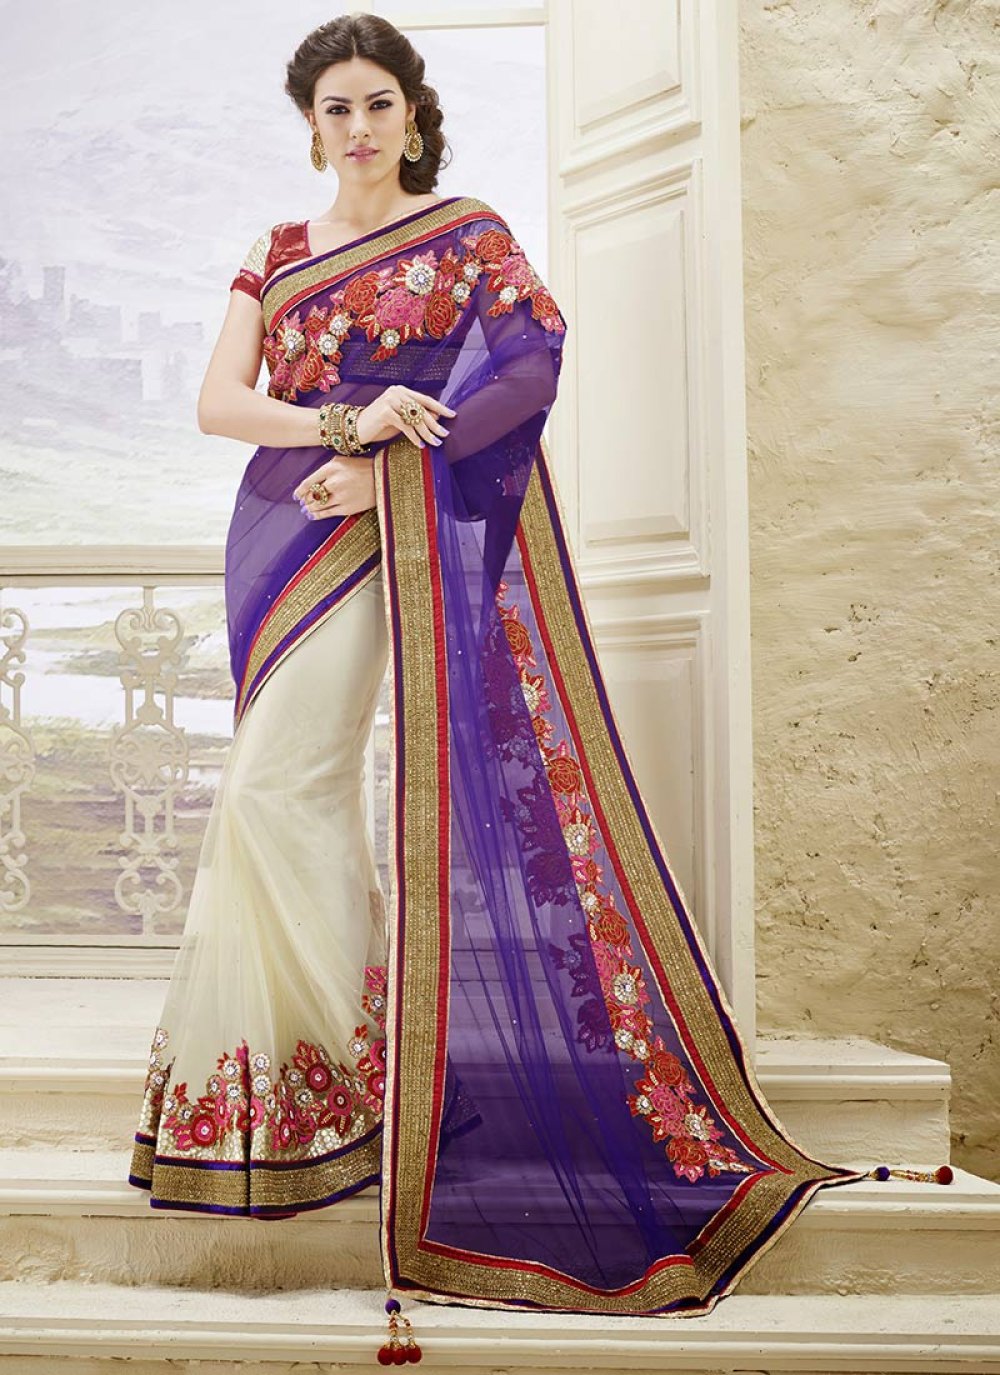 Nikitha Kanchipattu Half Saree - Saree Blouse Patterns